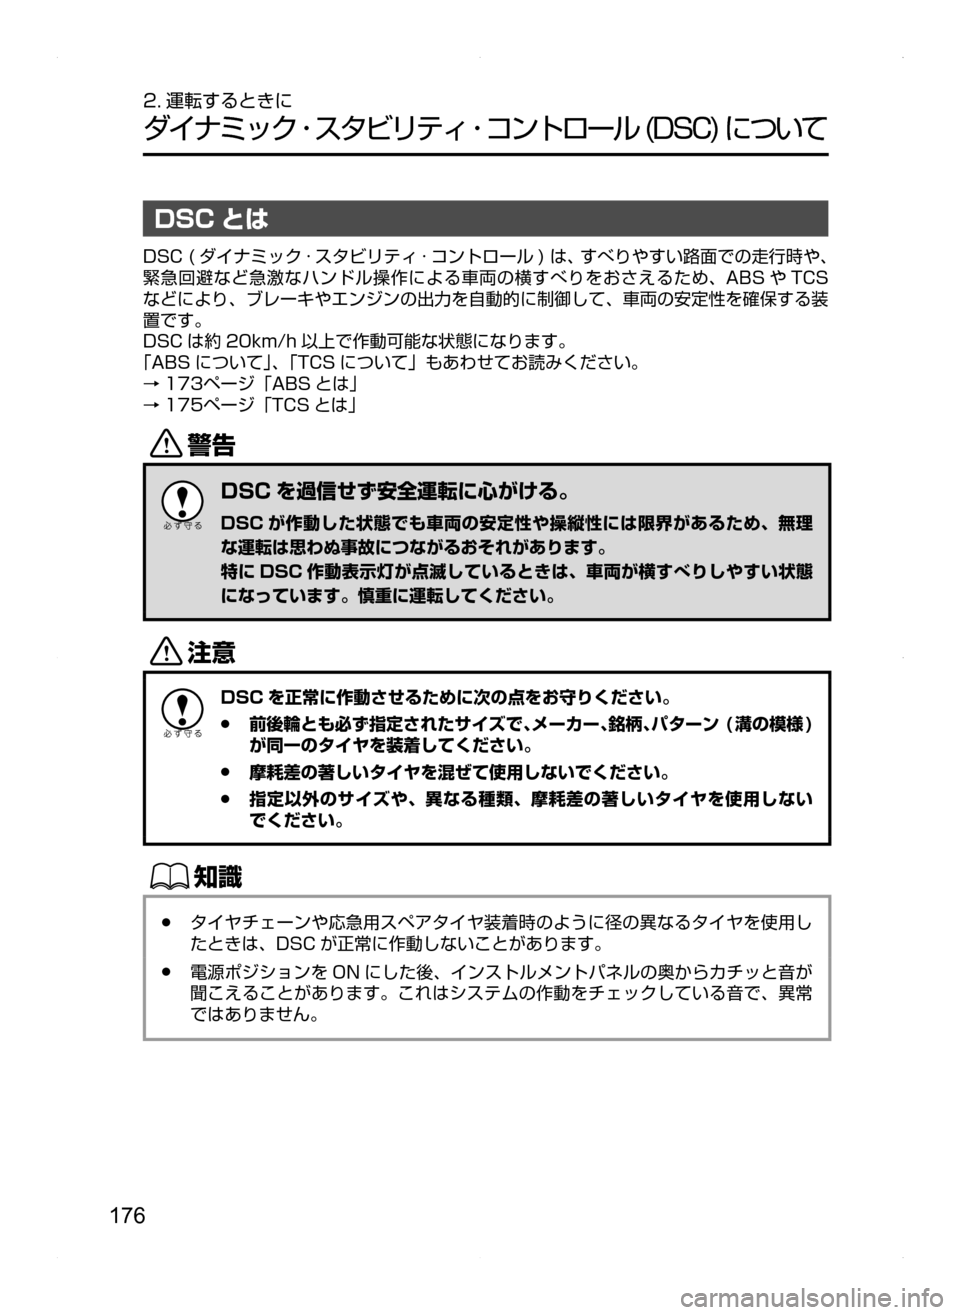 MAZDA MODEL BIANTE 2008  取扱説明書 (in Japanese) 176
2. 運転するときに
ダイナミック ･ スタビリティ ･ コントロール(DSC)について
DSC とは
DSC( ダイナミック · スタビリティ · コントロール )は､ �